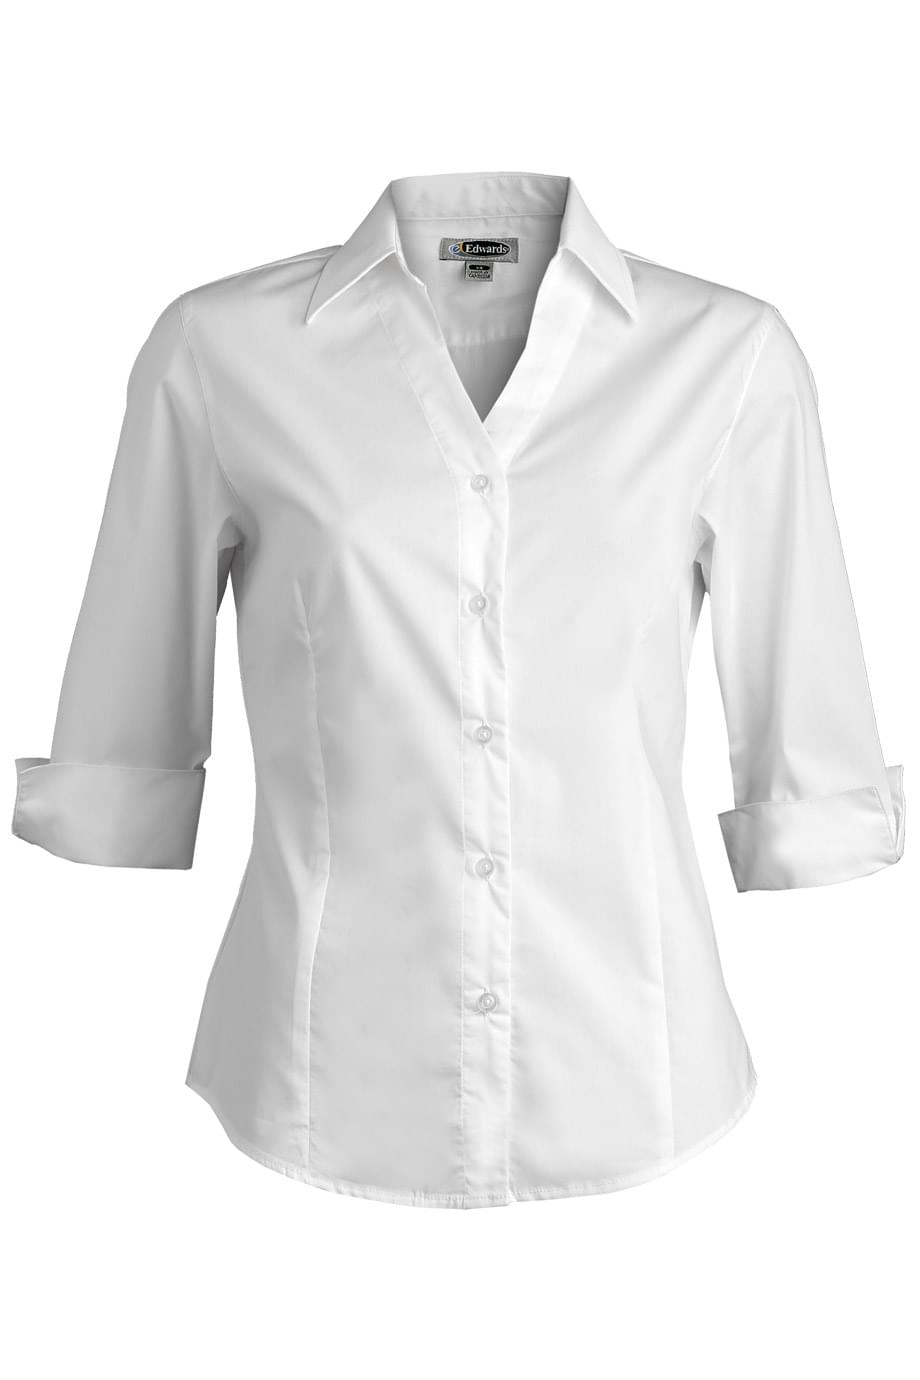 Edwards Garment 5045 - Three Quarter Sleeve Blouse